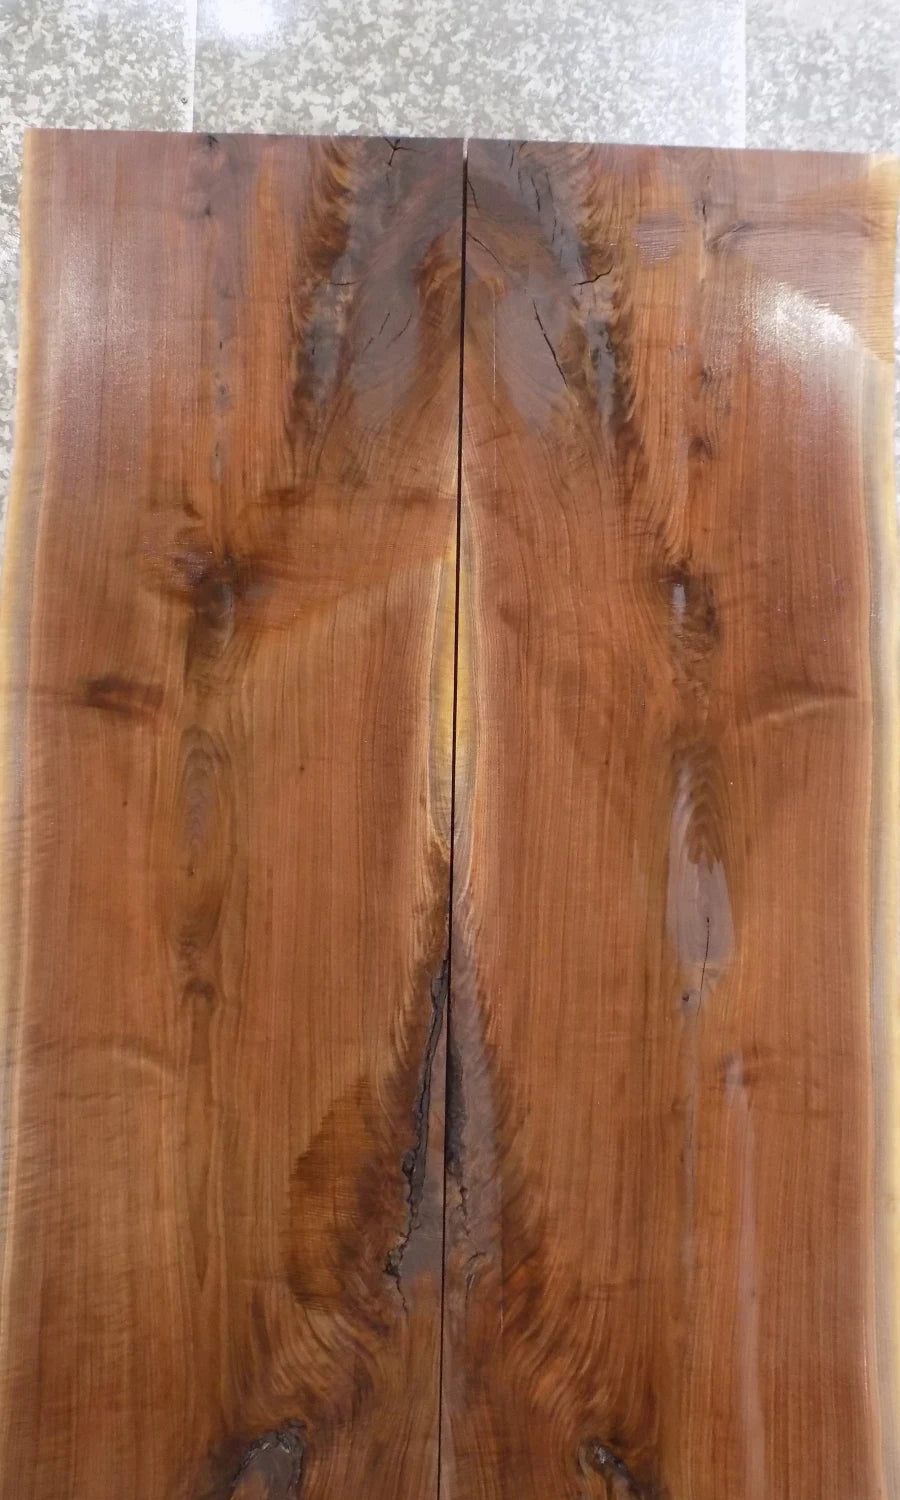 2- Rustic Black Walnut Live Edge Dining Table Top Wood Slab 1013-1014